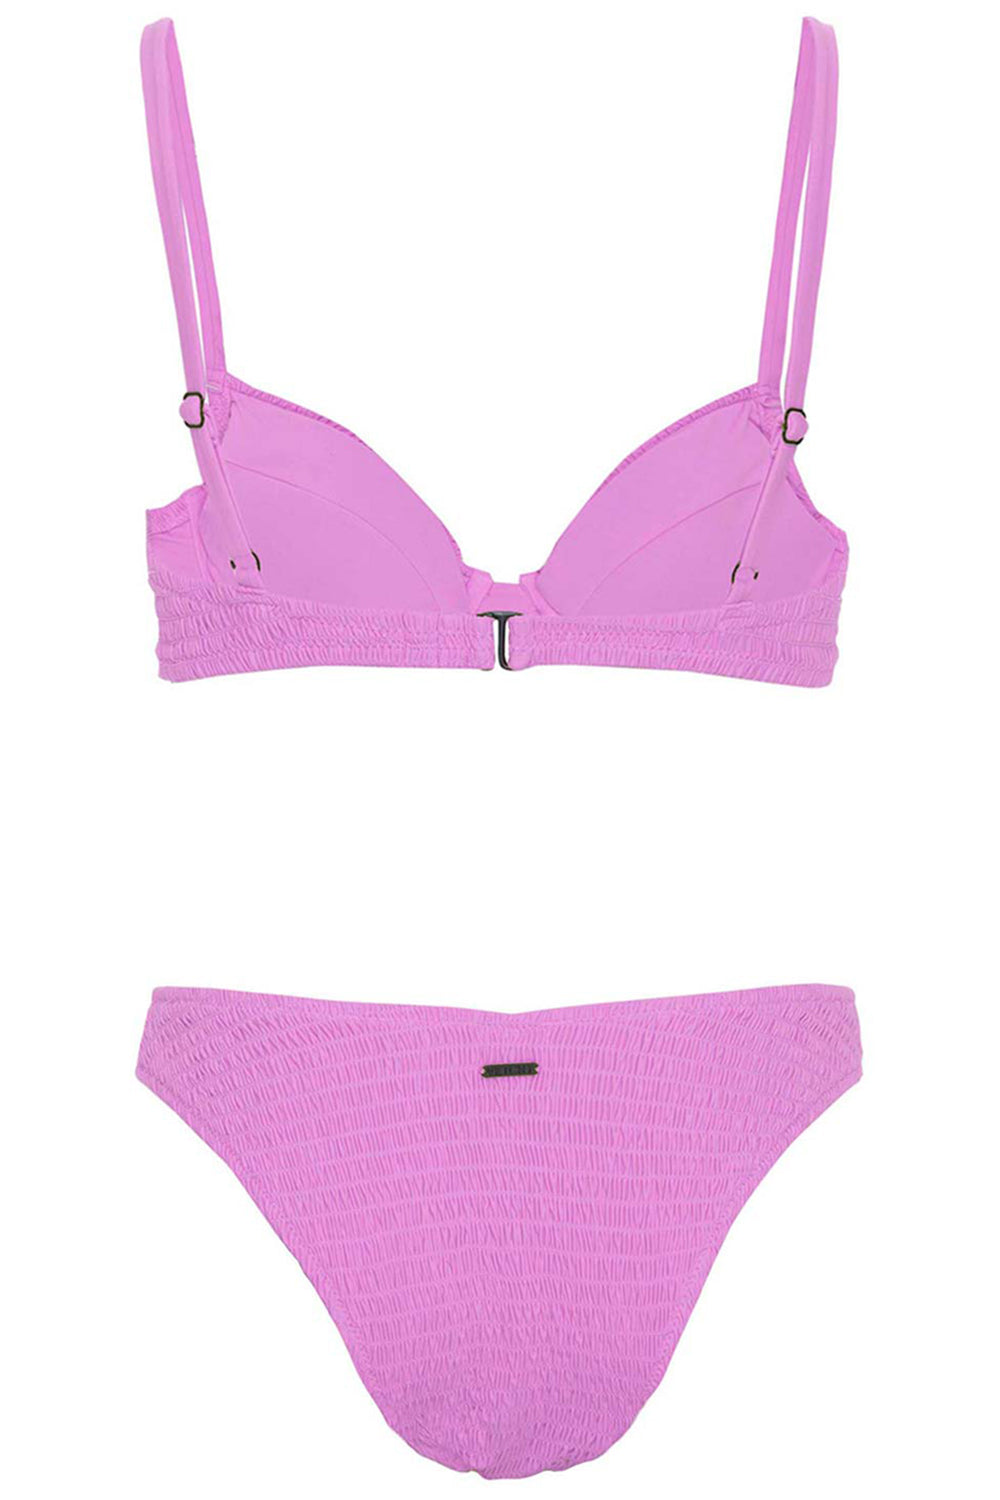 Victoria's Secret underwear set 34C for Sale in Los Angeles, CA